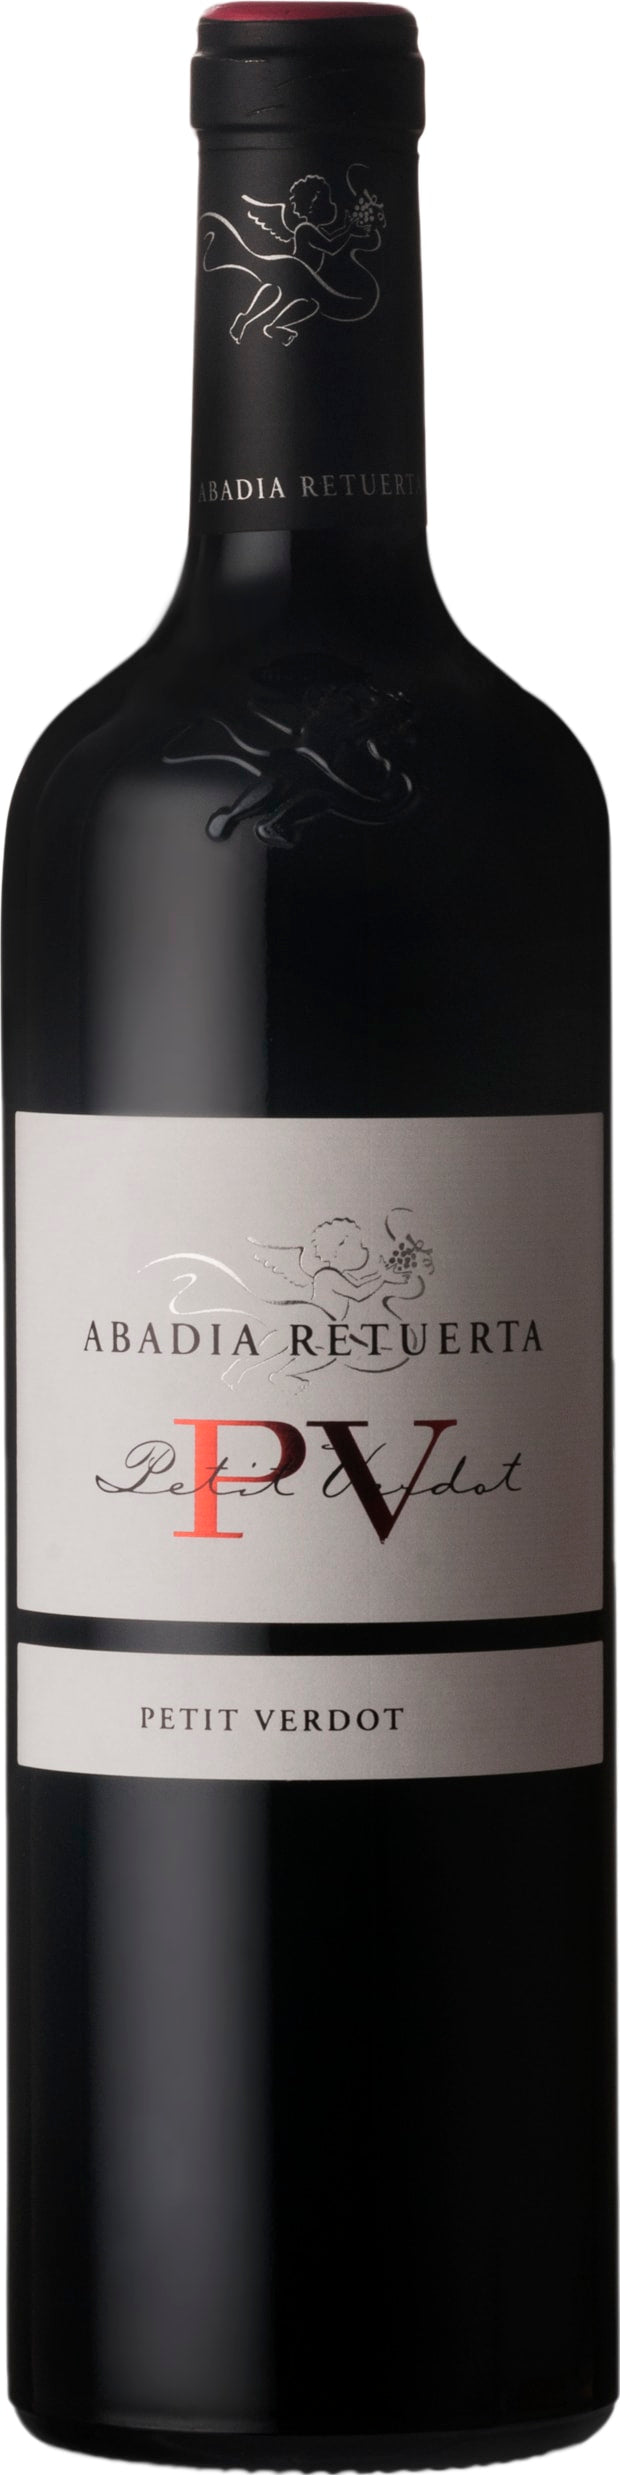 Abadia Retuerta PV Petit Verdot 2015 75cl - Buy Abadia Retuerta Wines from GREAT WINES DIRECT wine shop